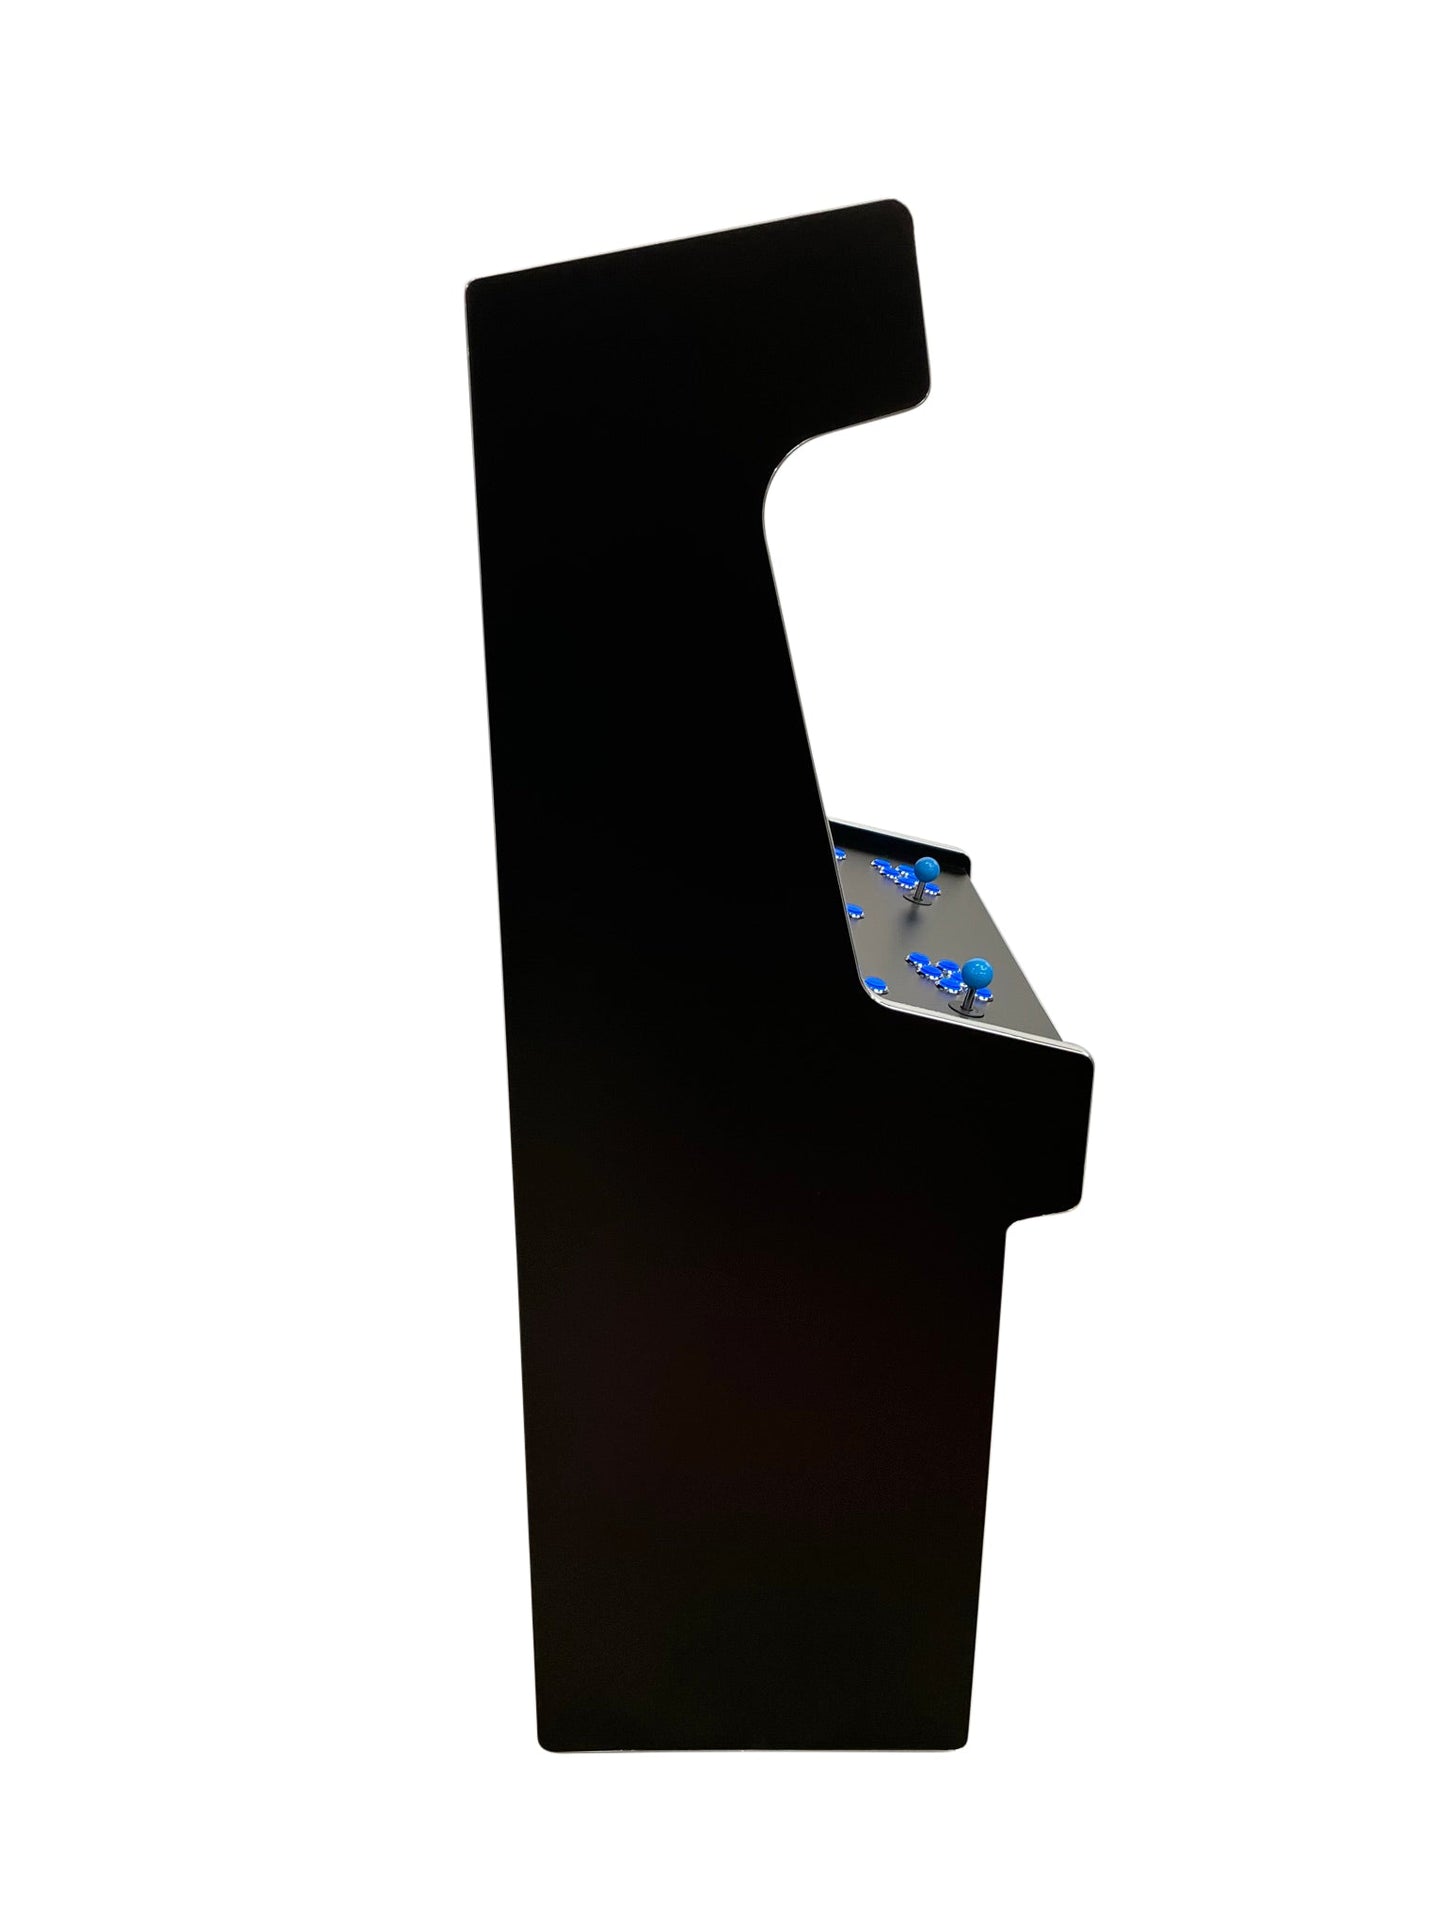 27 Inch Upright Arcade Cabinet - Flatout Arcades